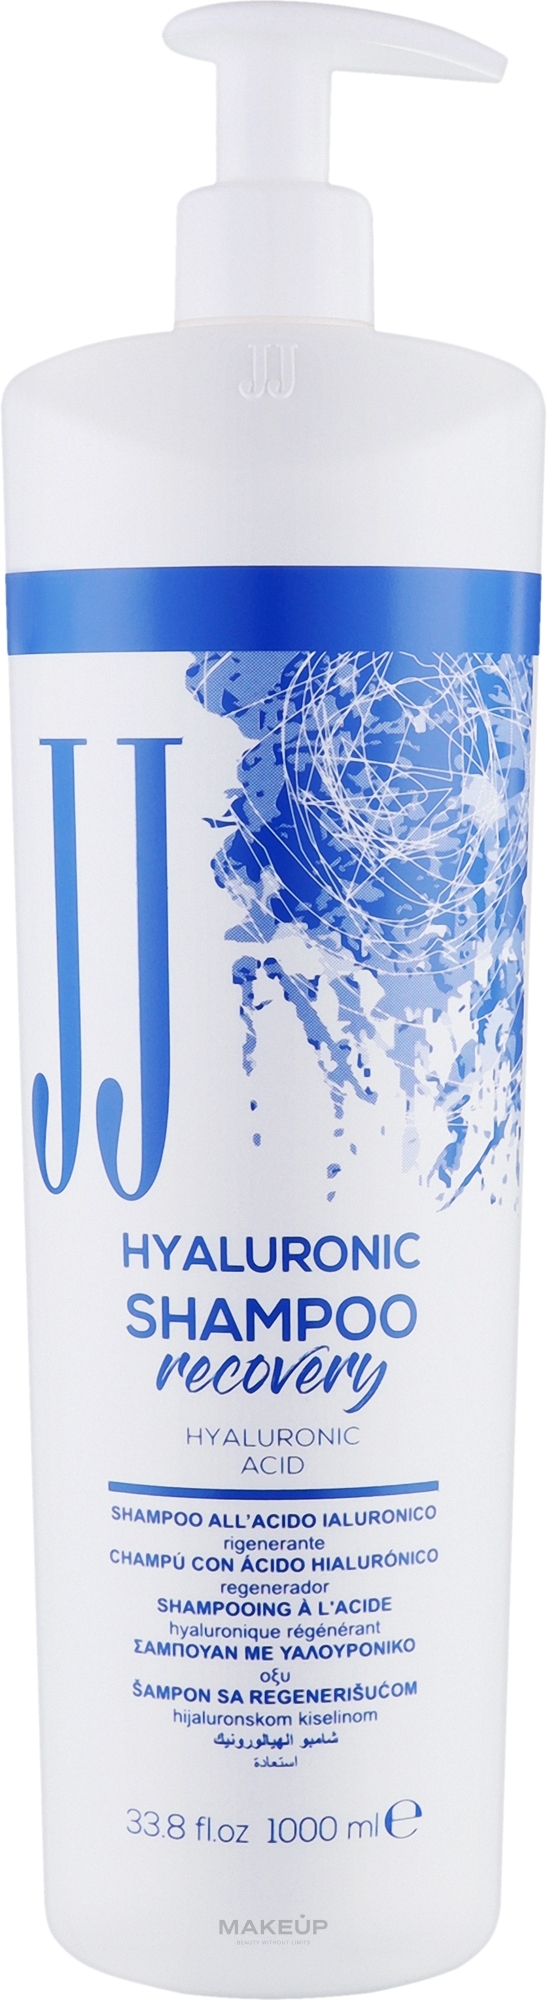 Гиалуроновый шампунь для волос - JJ Hyaluronic Shampoo Recovery — фото 1000ml